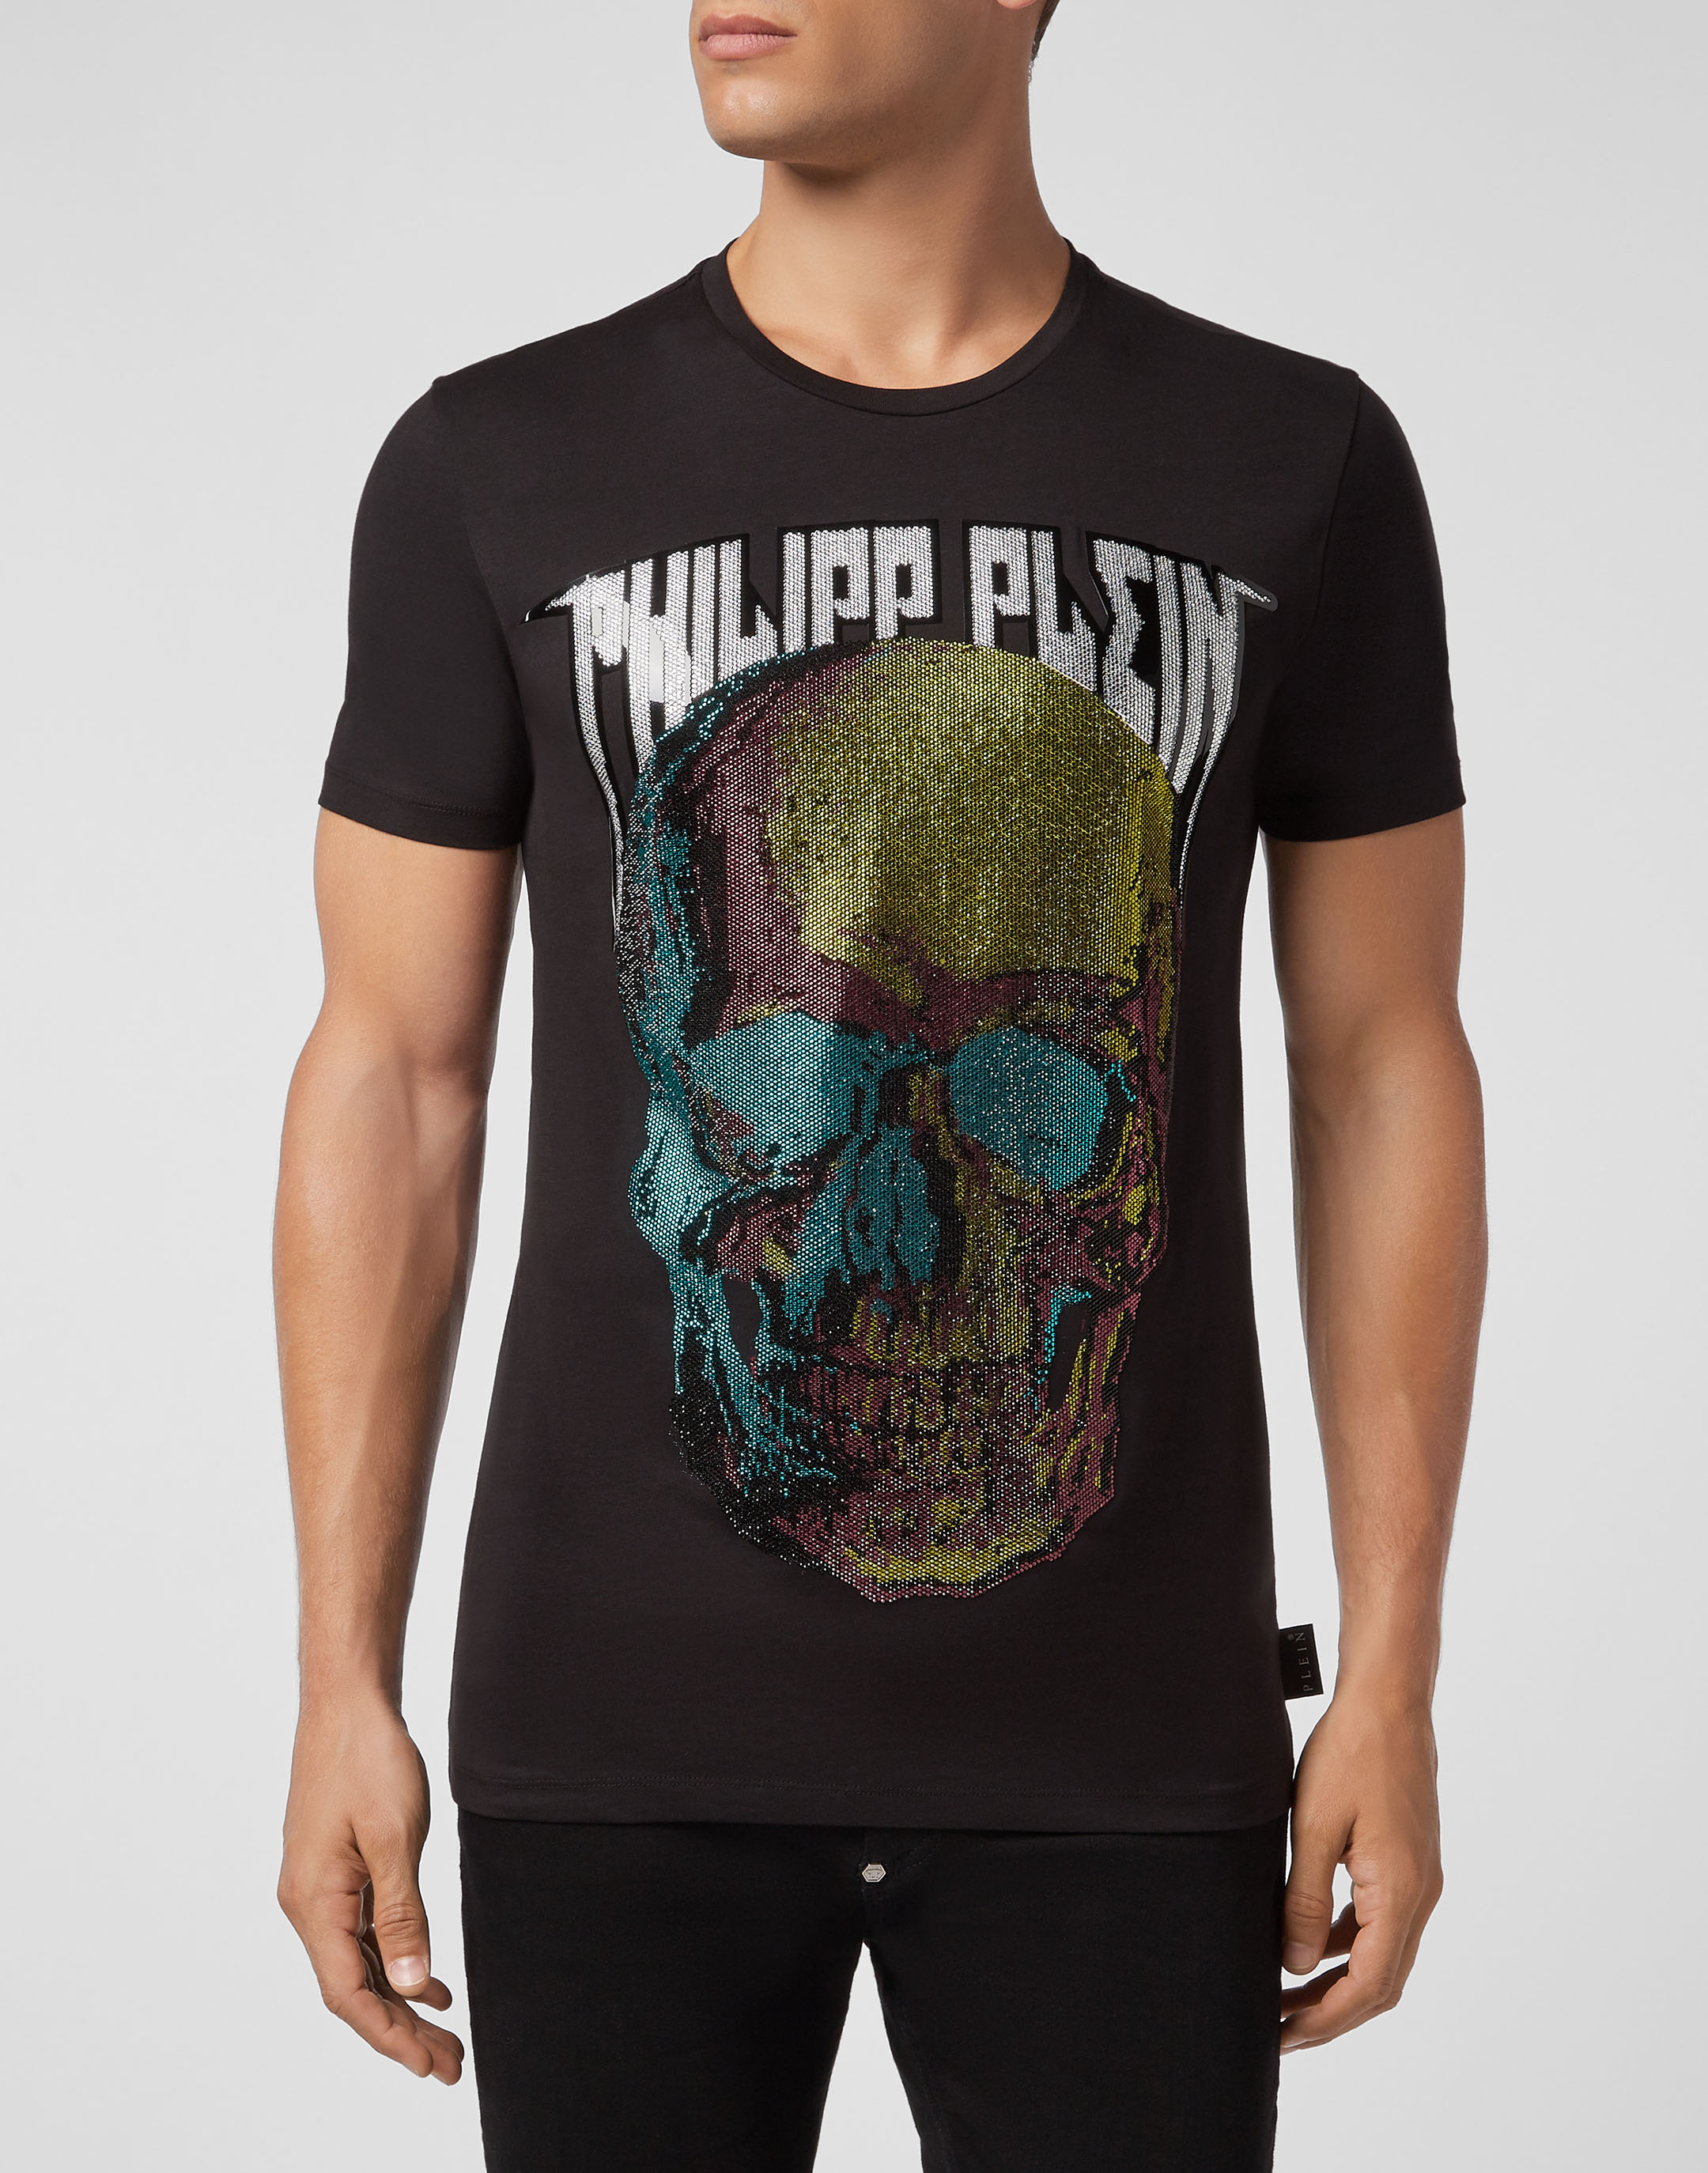 T-shirt Round Neck SS Skull and Plein